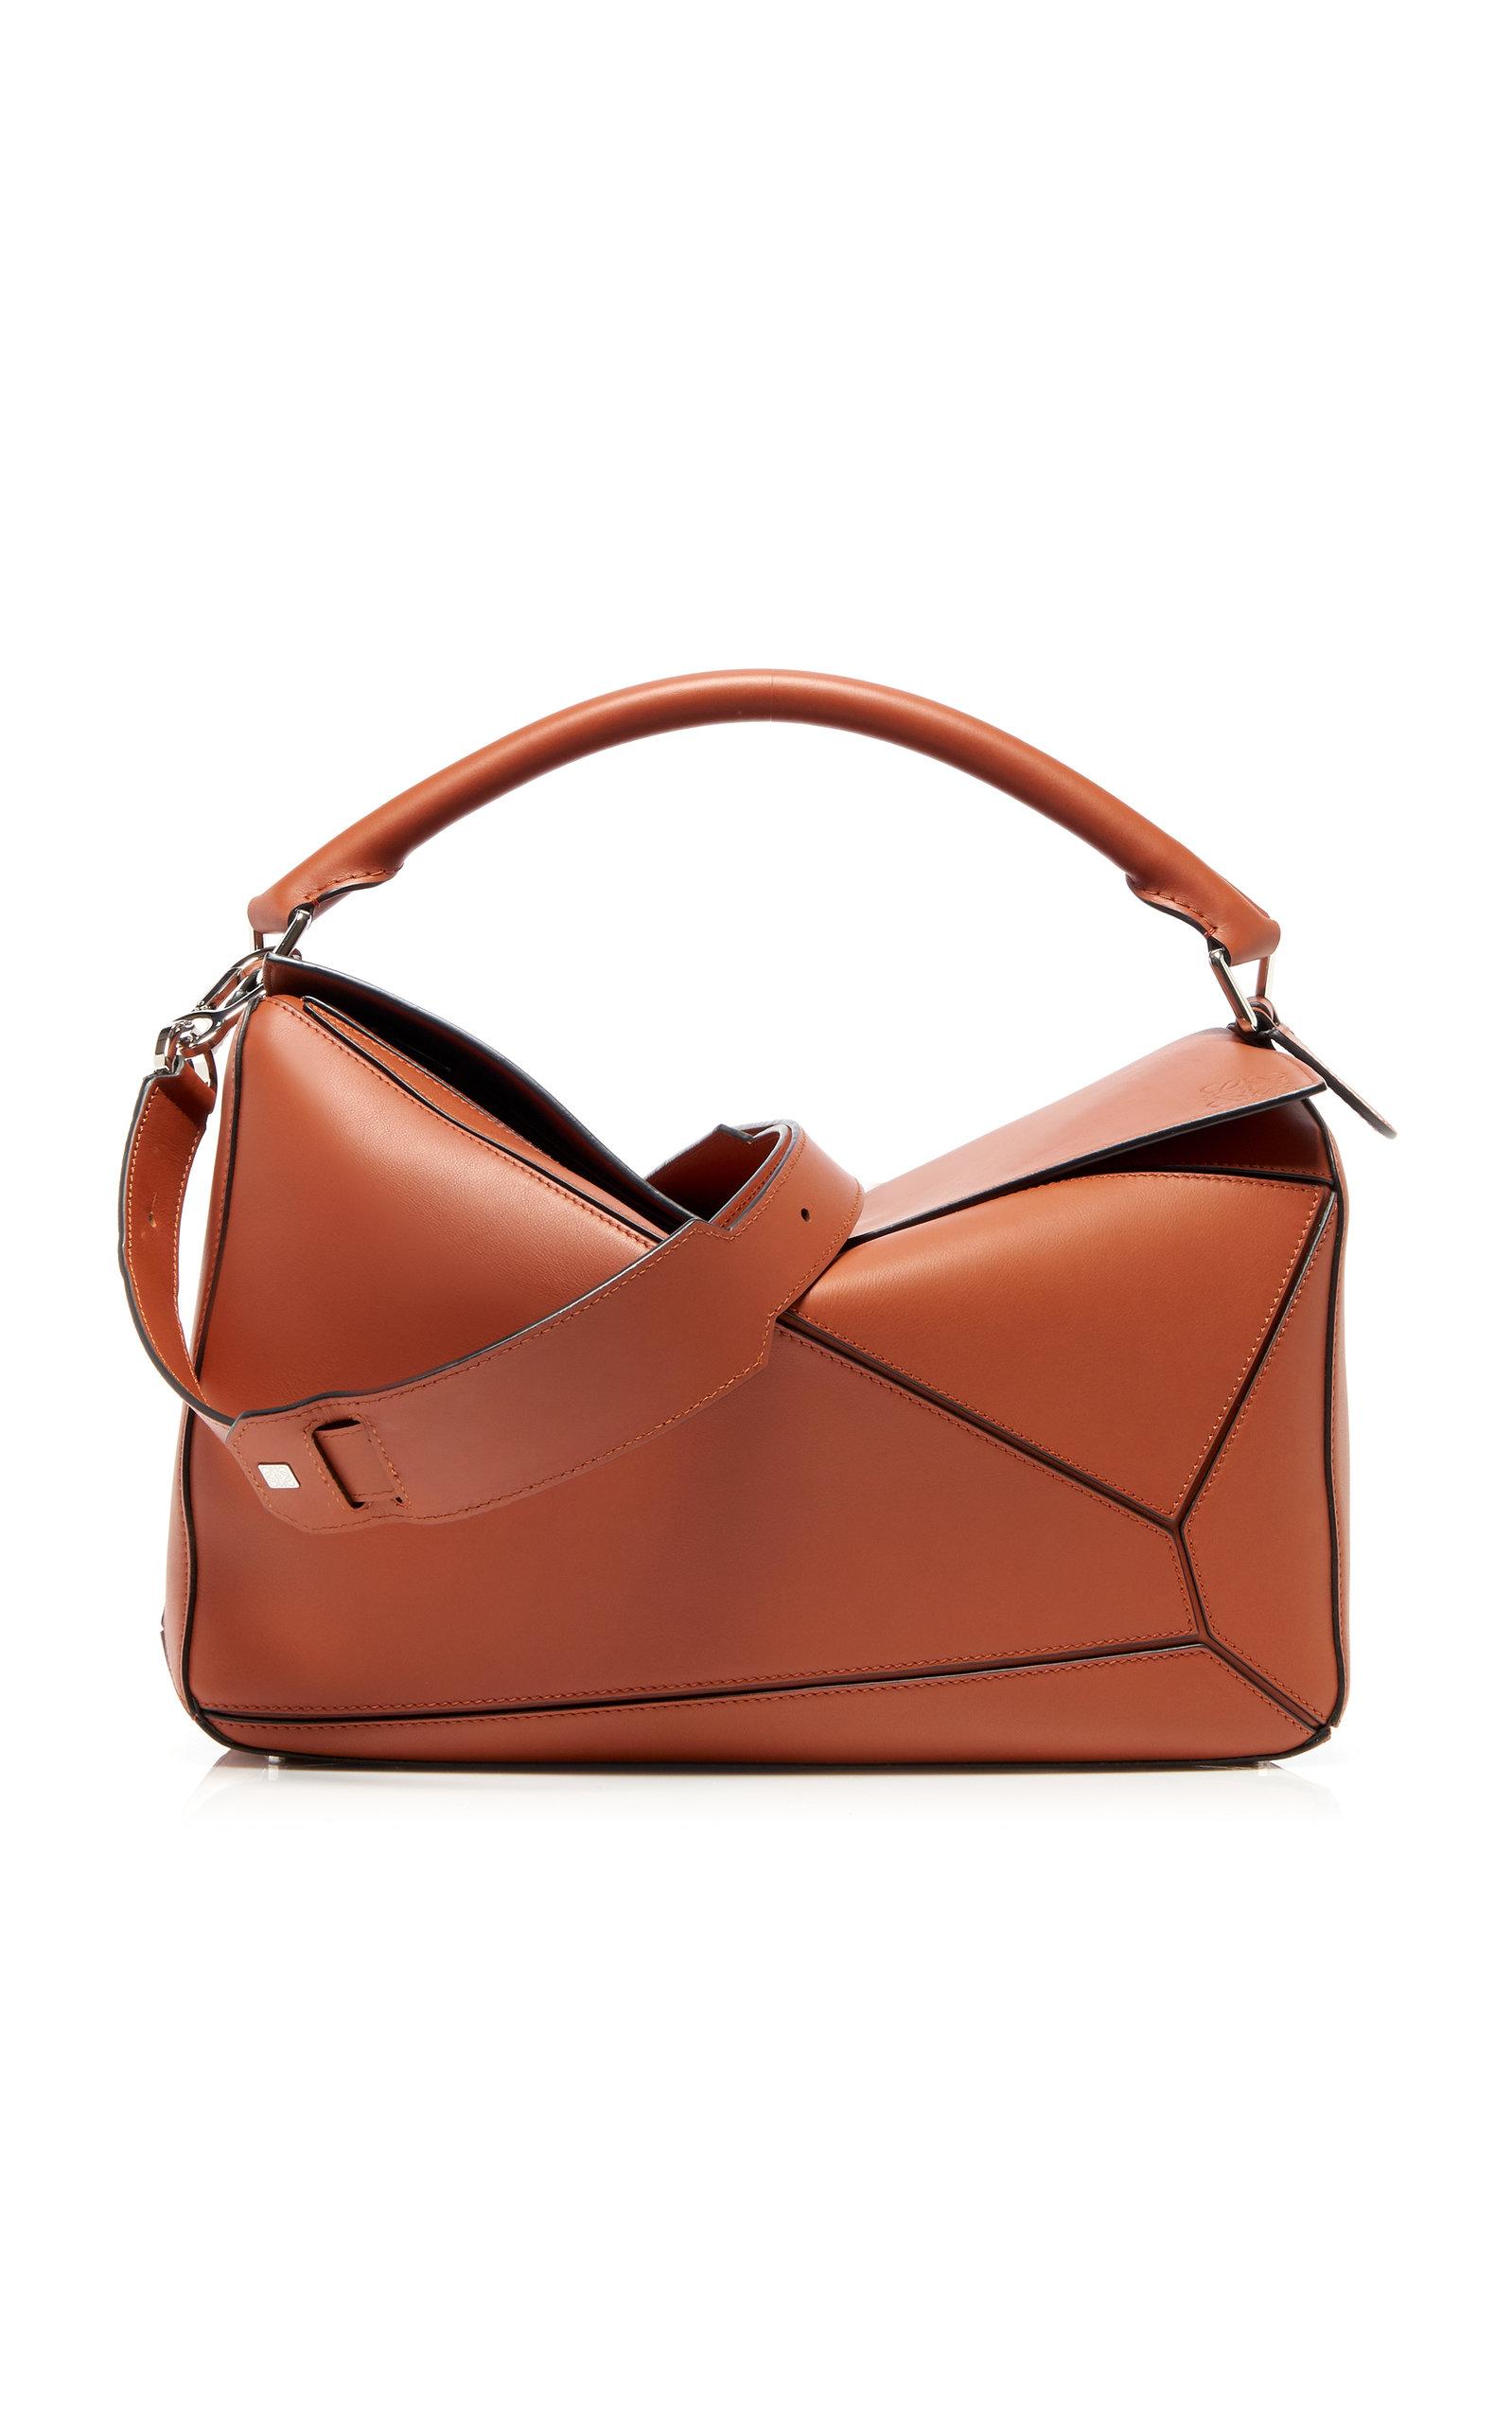 Loewe Puzzle Large Leather Shoulder Bag in Brown for Men - Lyst